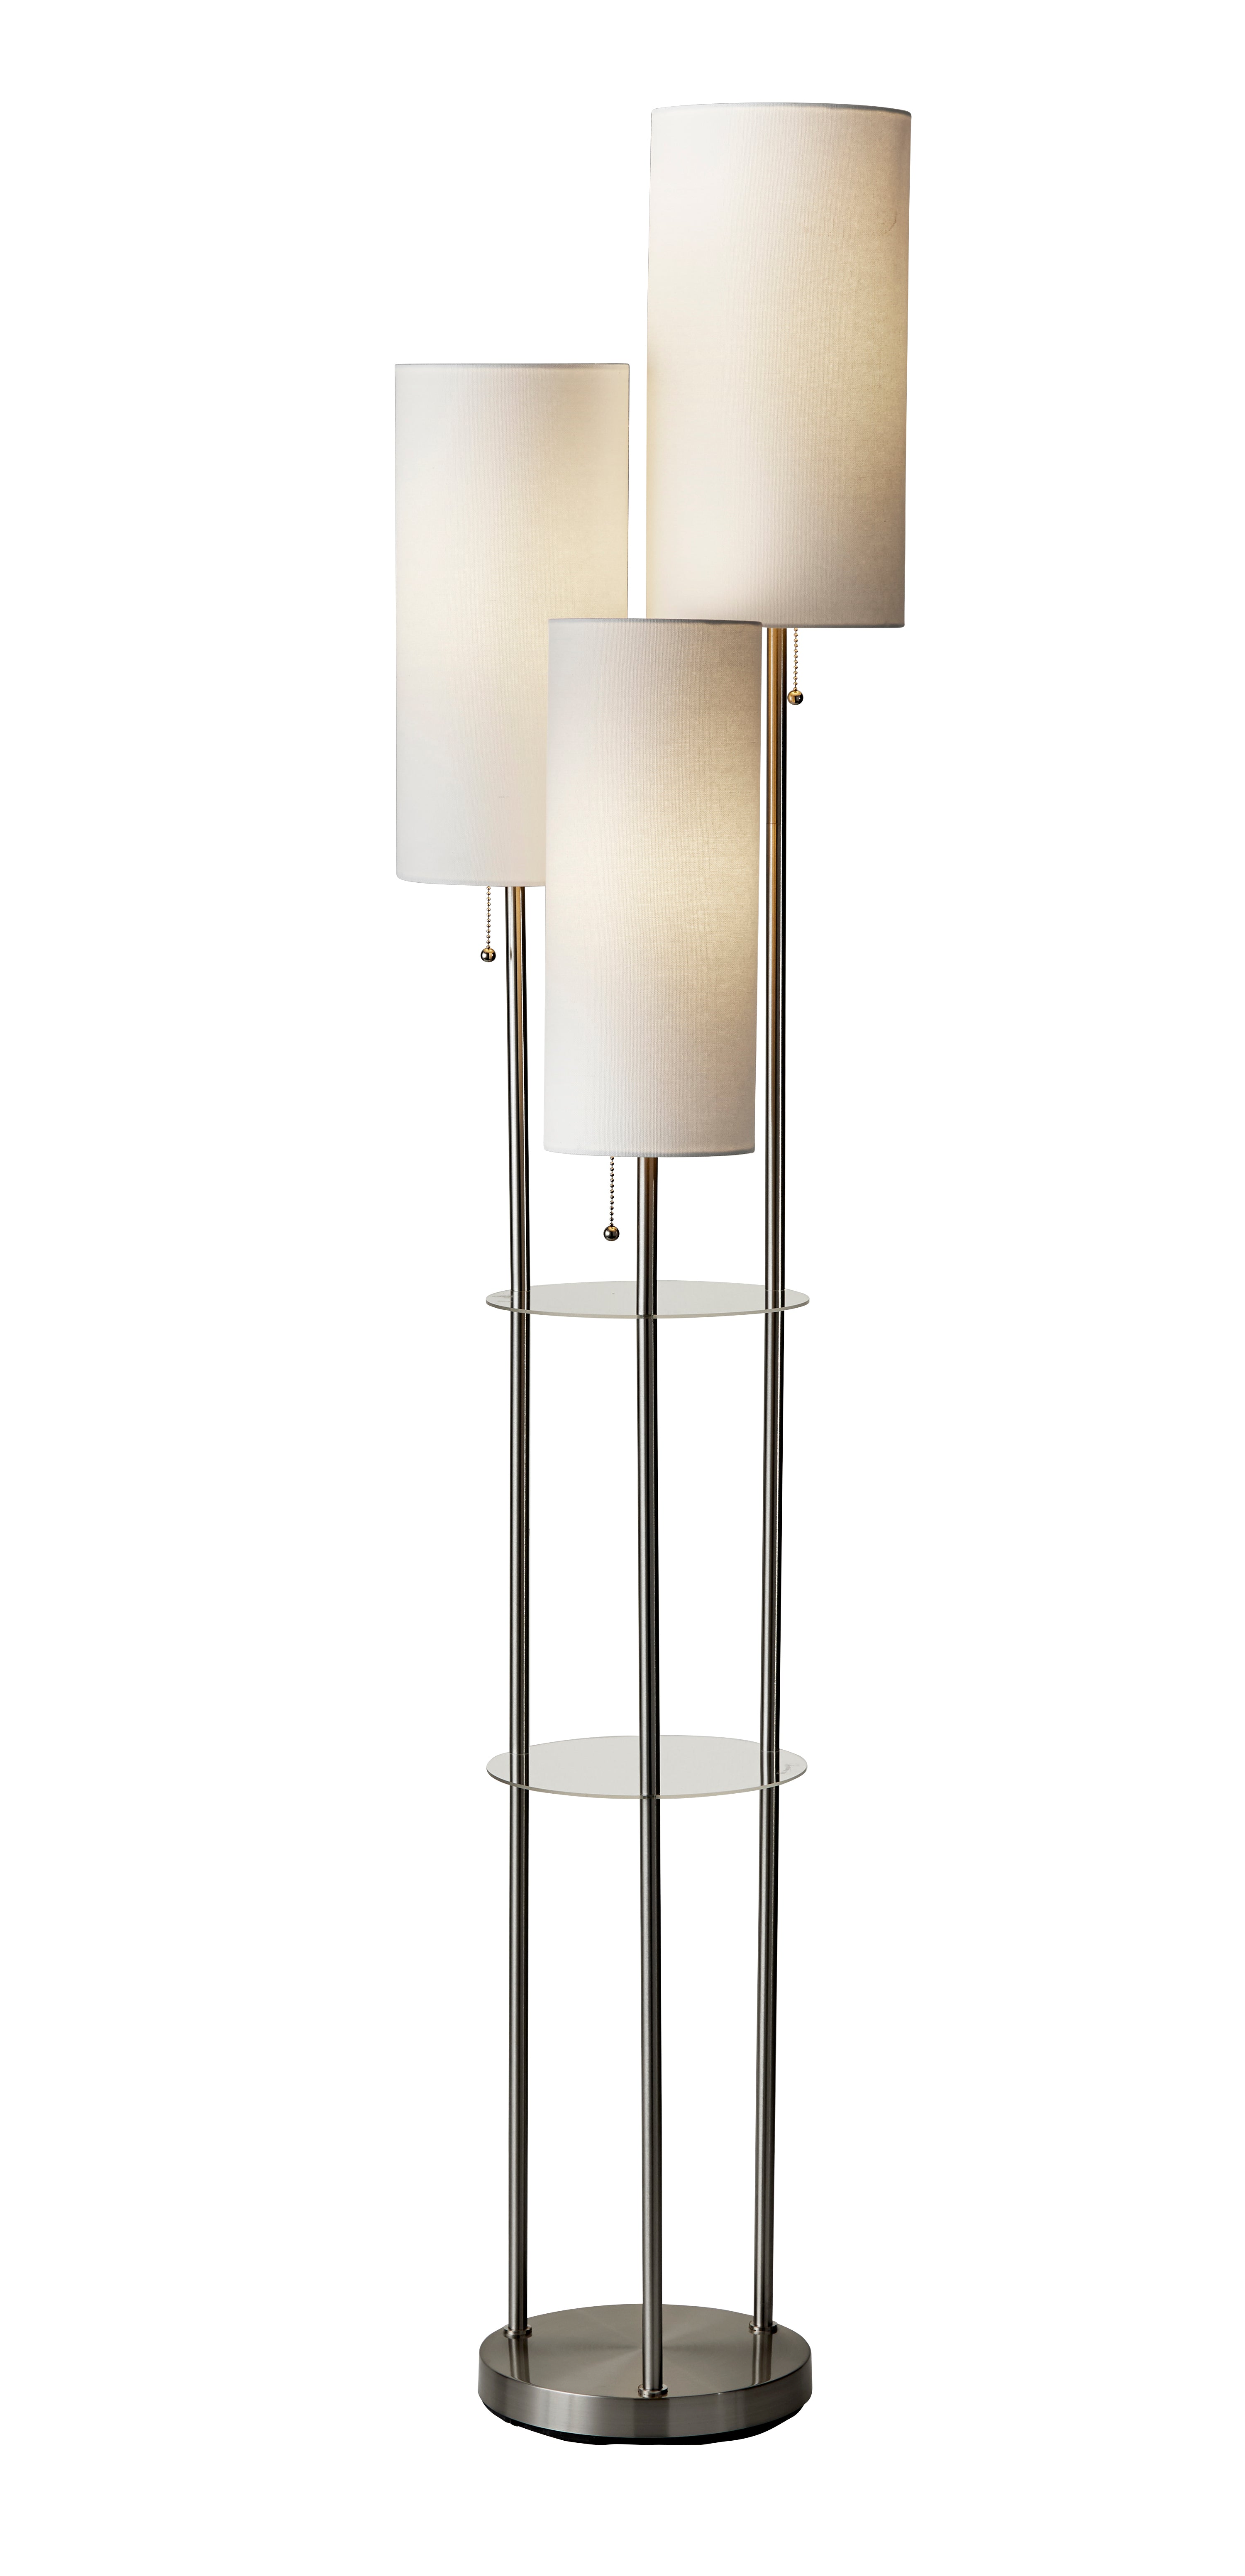 HAVANA Floor lamp Stainless steel - 4305-22 | ADESSO